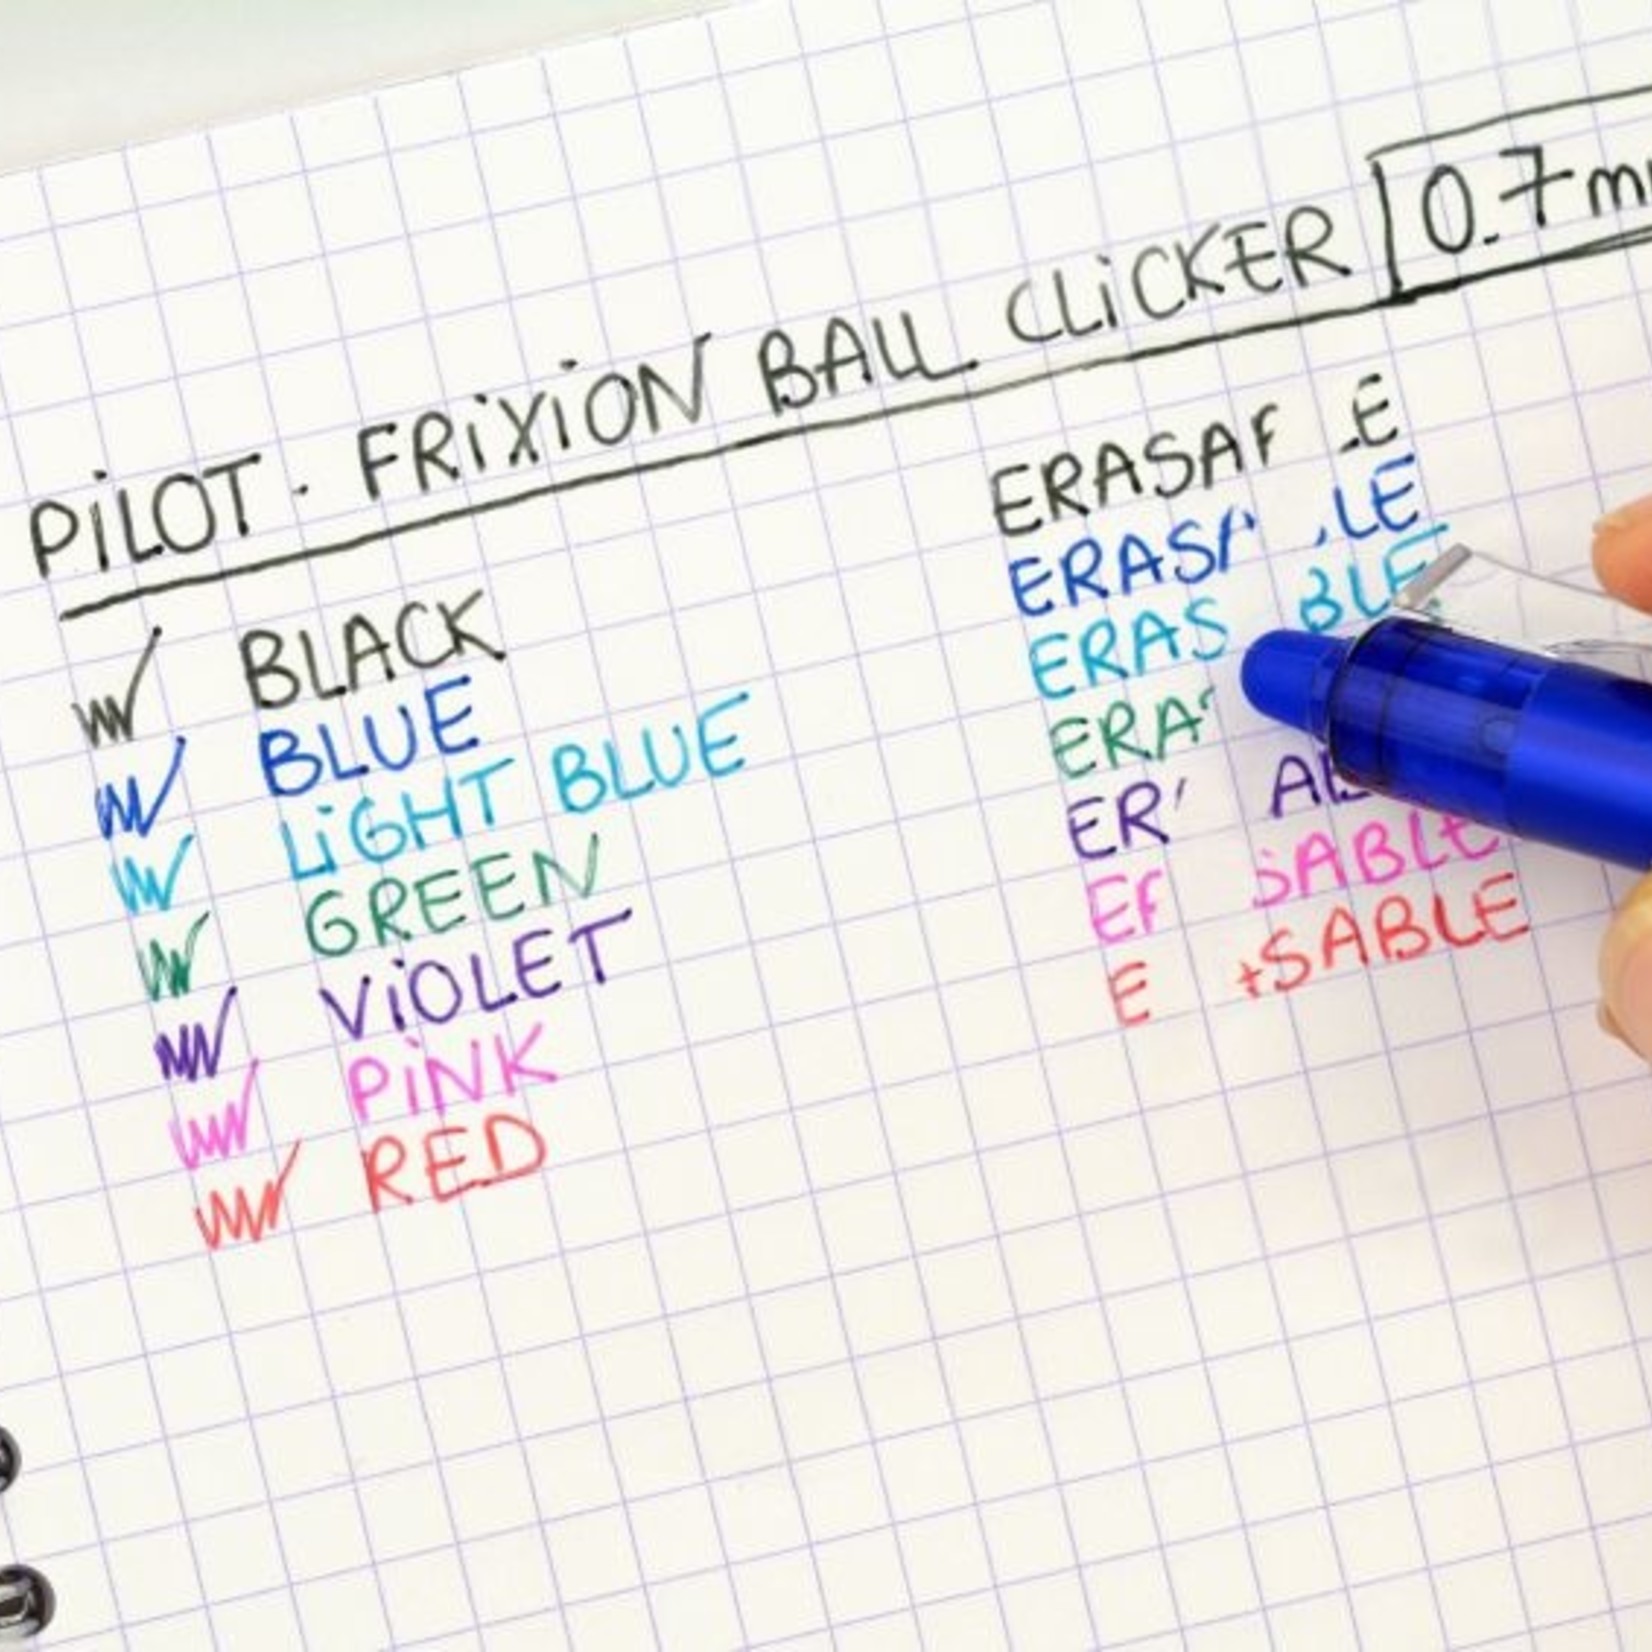 PILOT FRIXION BALL CLICKER ERASABLE INK PEN FINE 0.7MM PINK